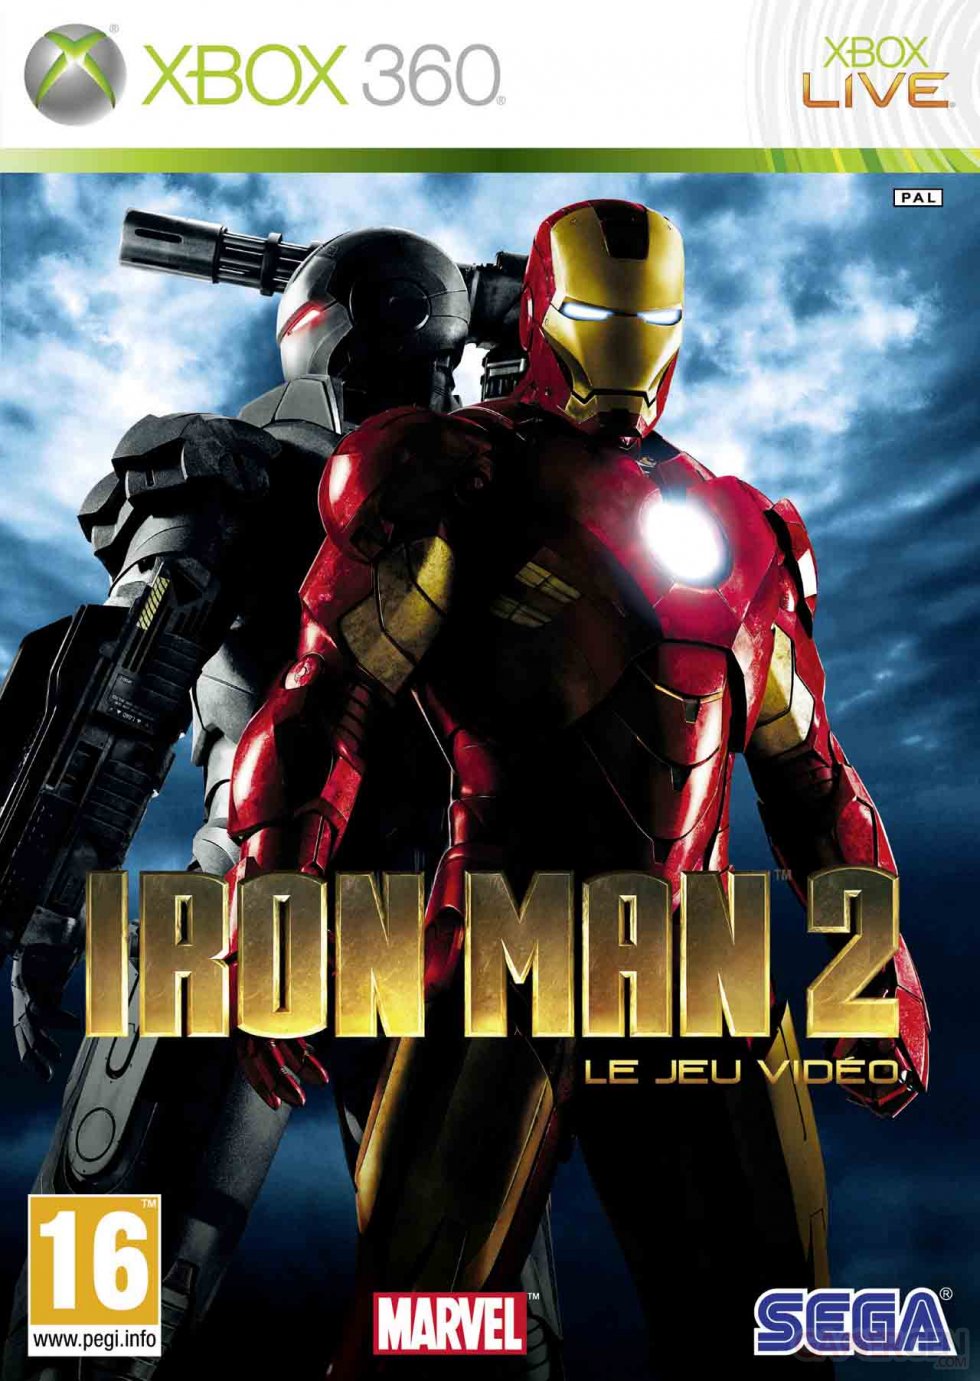 Iron Man 2 Le jeu vidéo